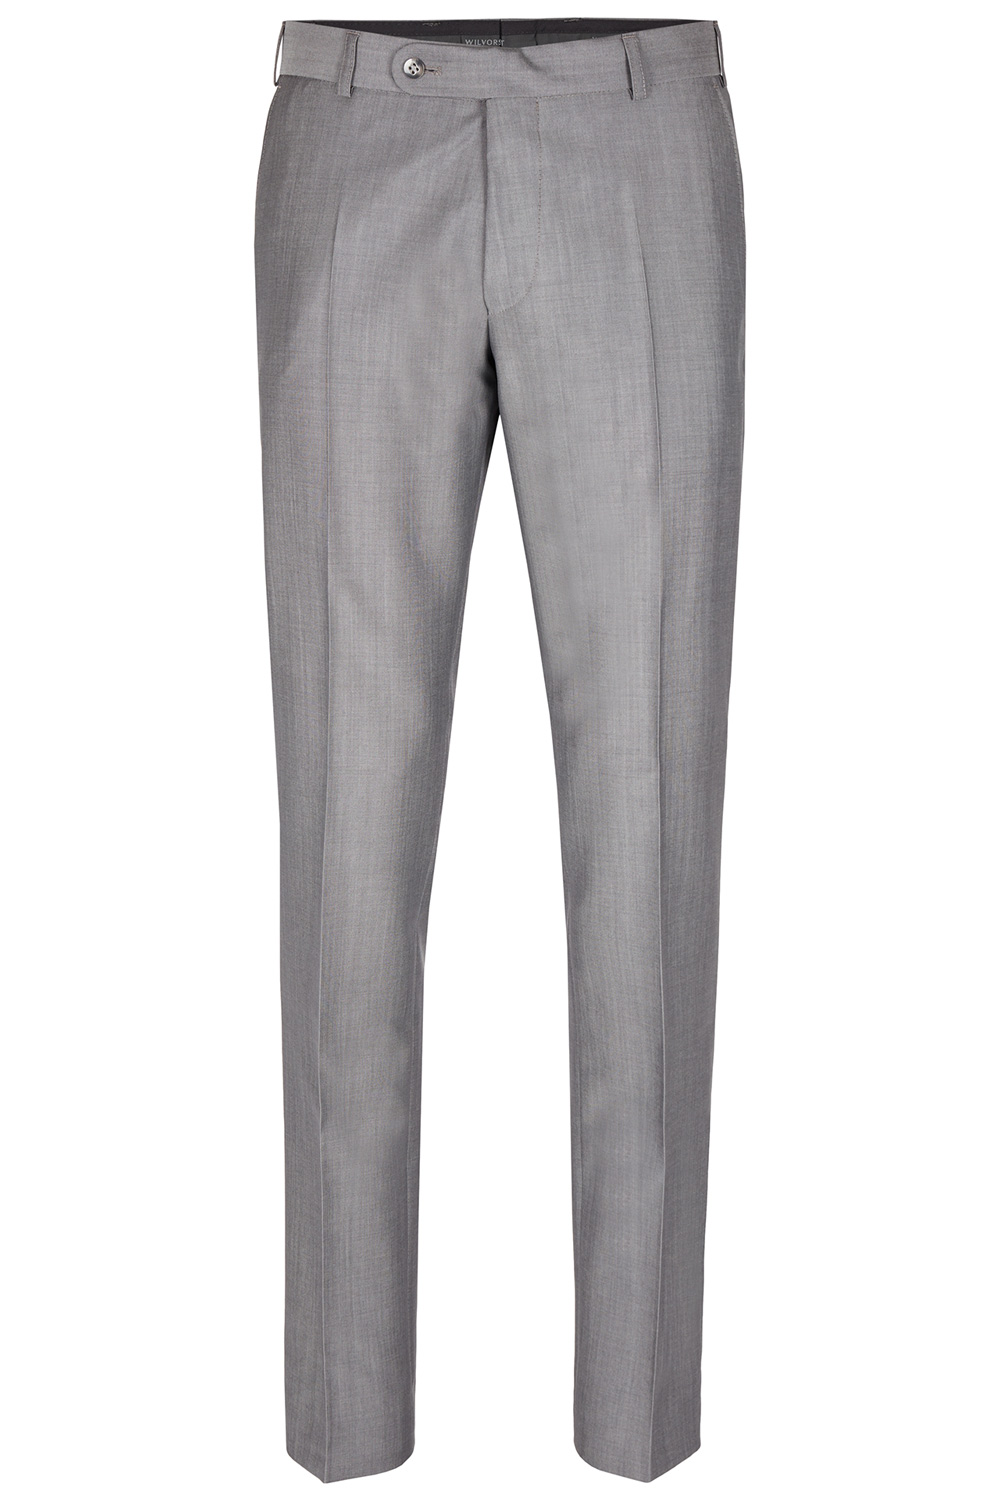 Grey Drop 8 Tuxedo - Tom Murphy's Formal and Menswear